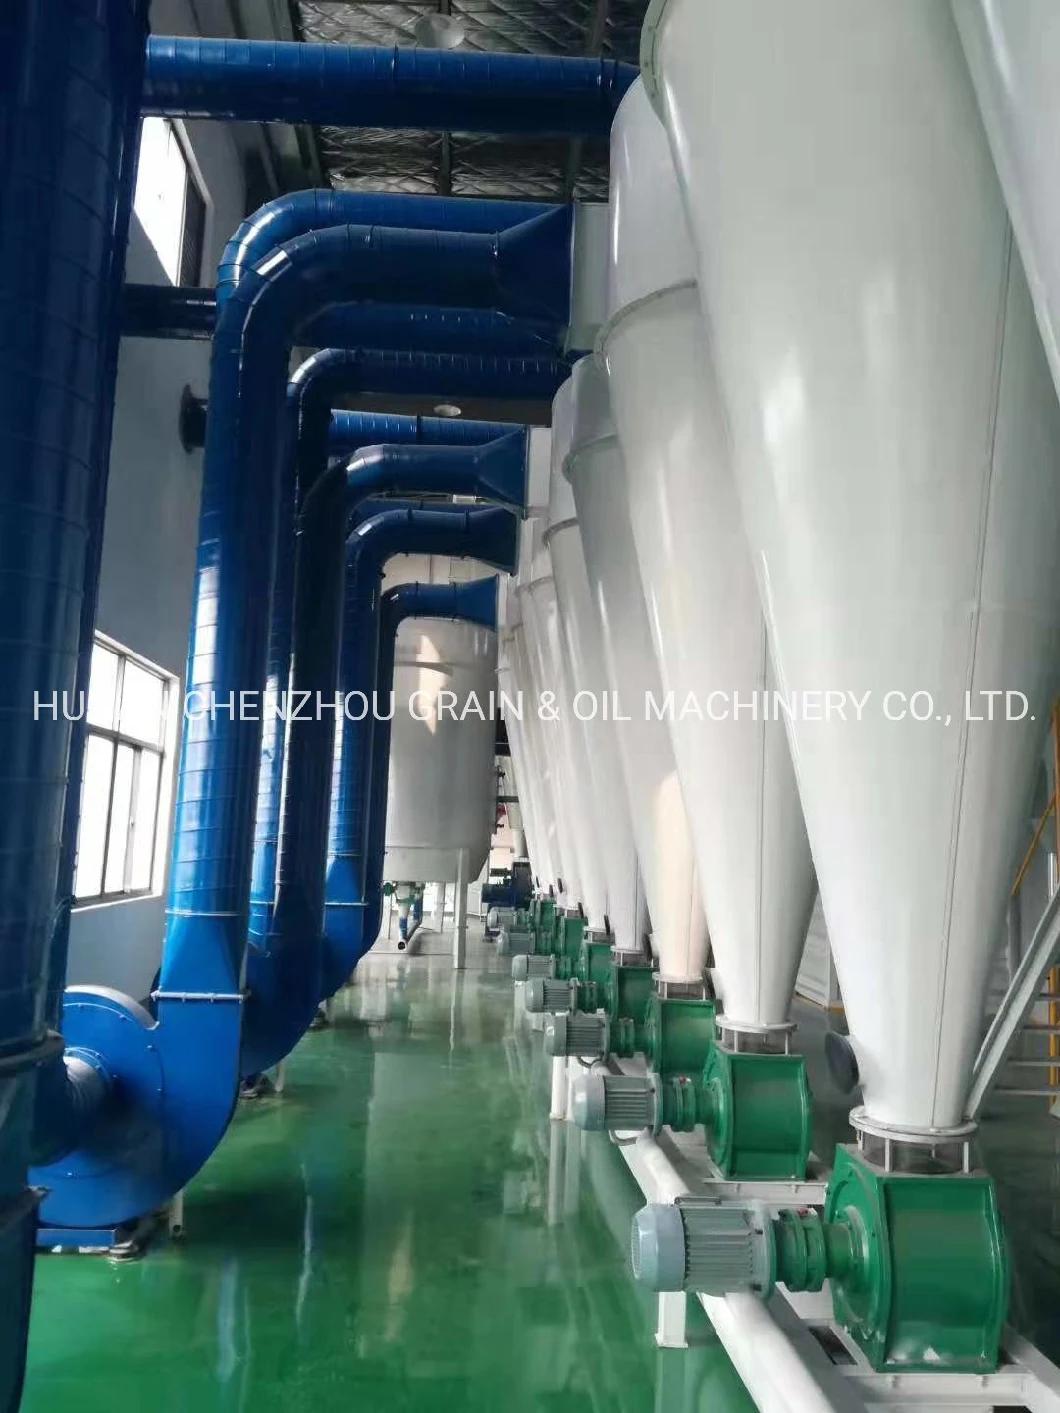 Clj Brand New Complete Buckwheat Milling Machinery Auto Milling Line Rice Mill Machine